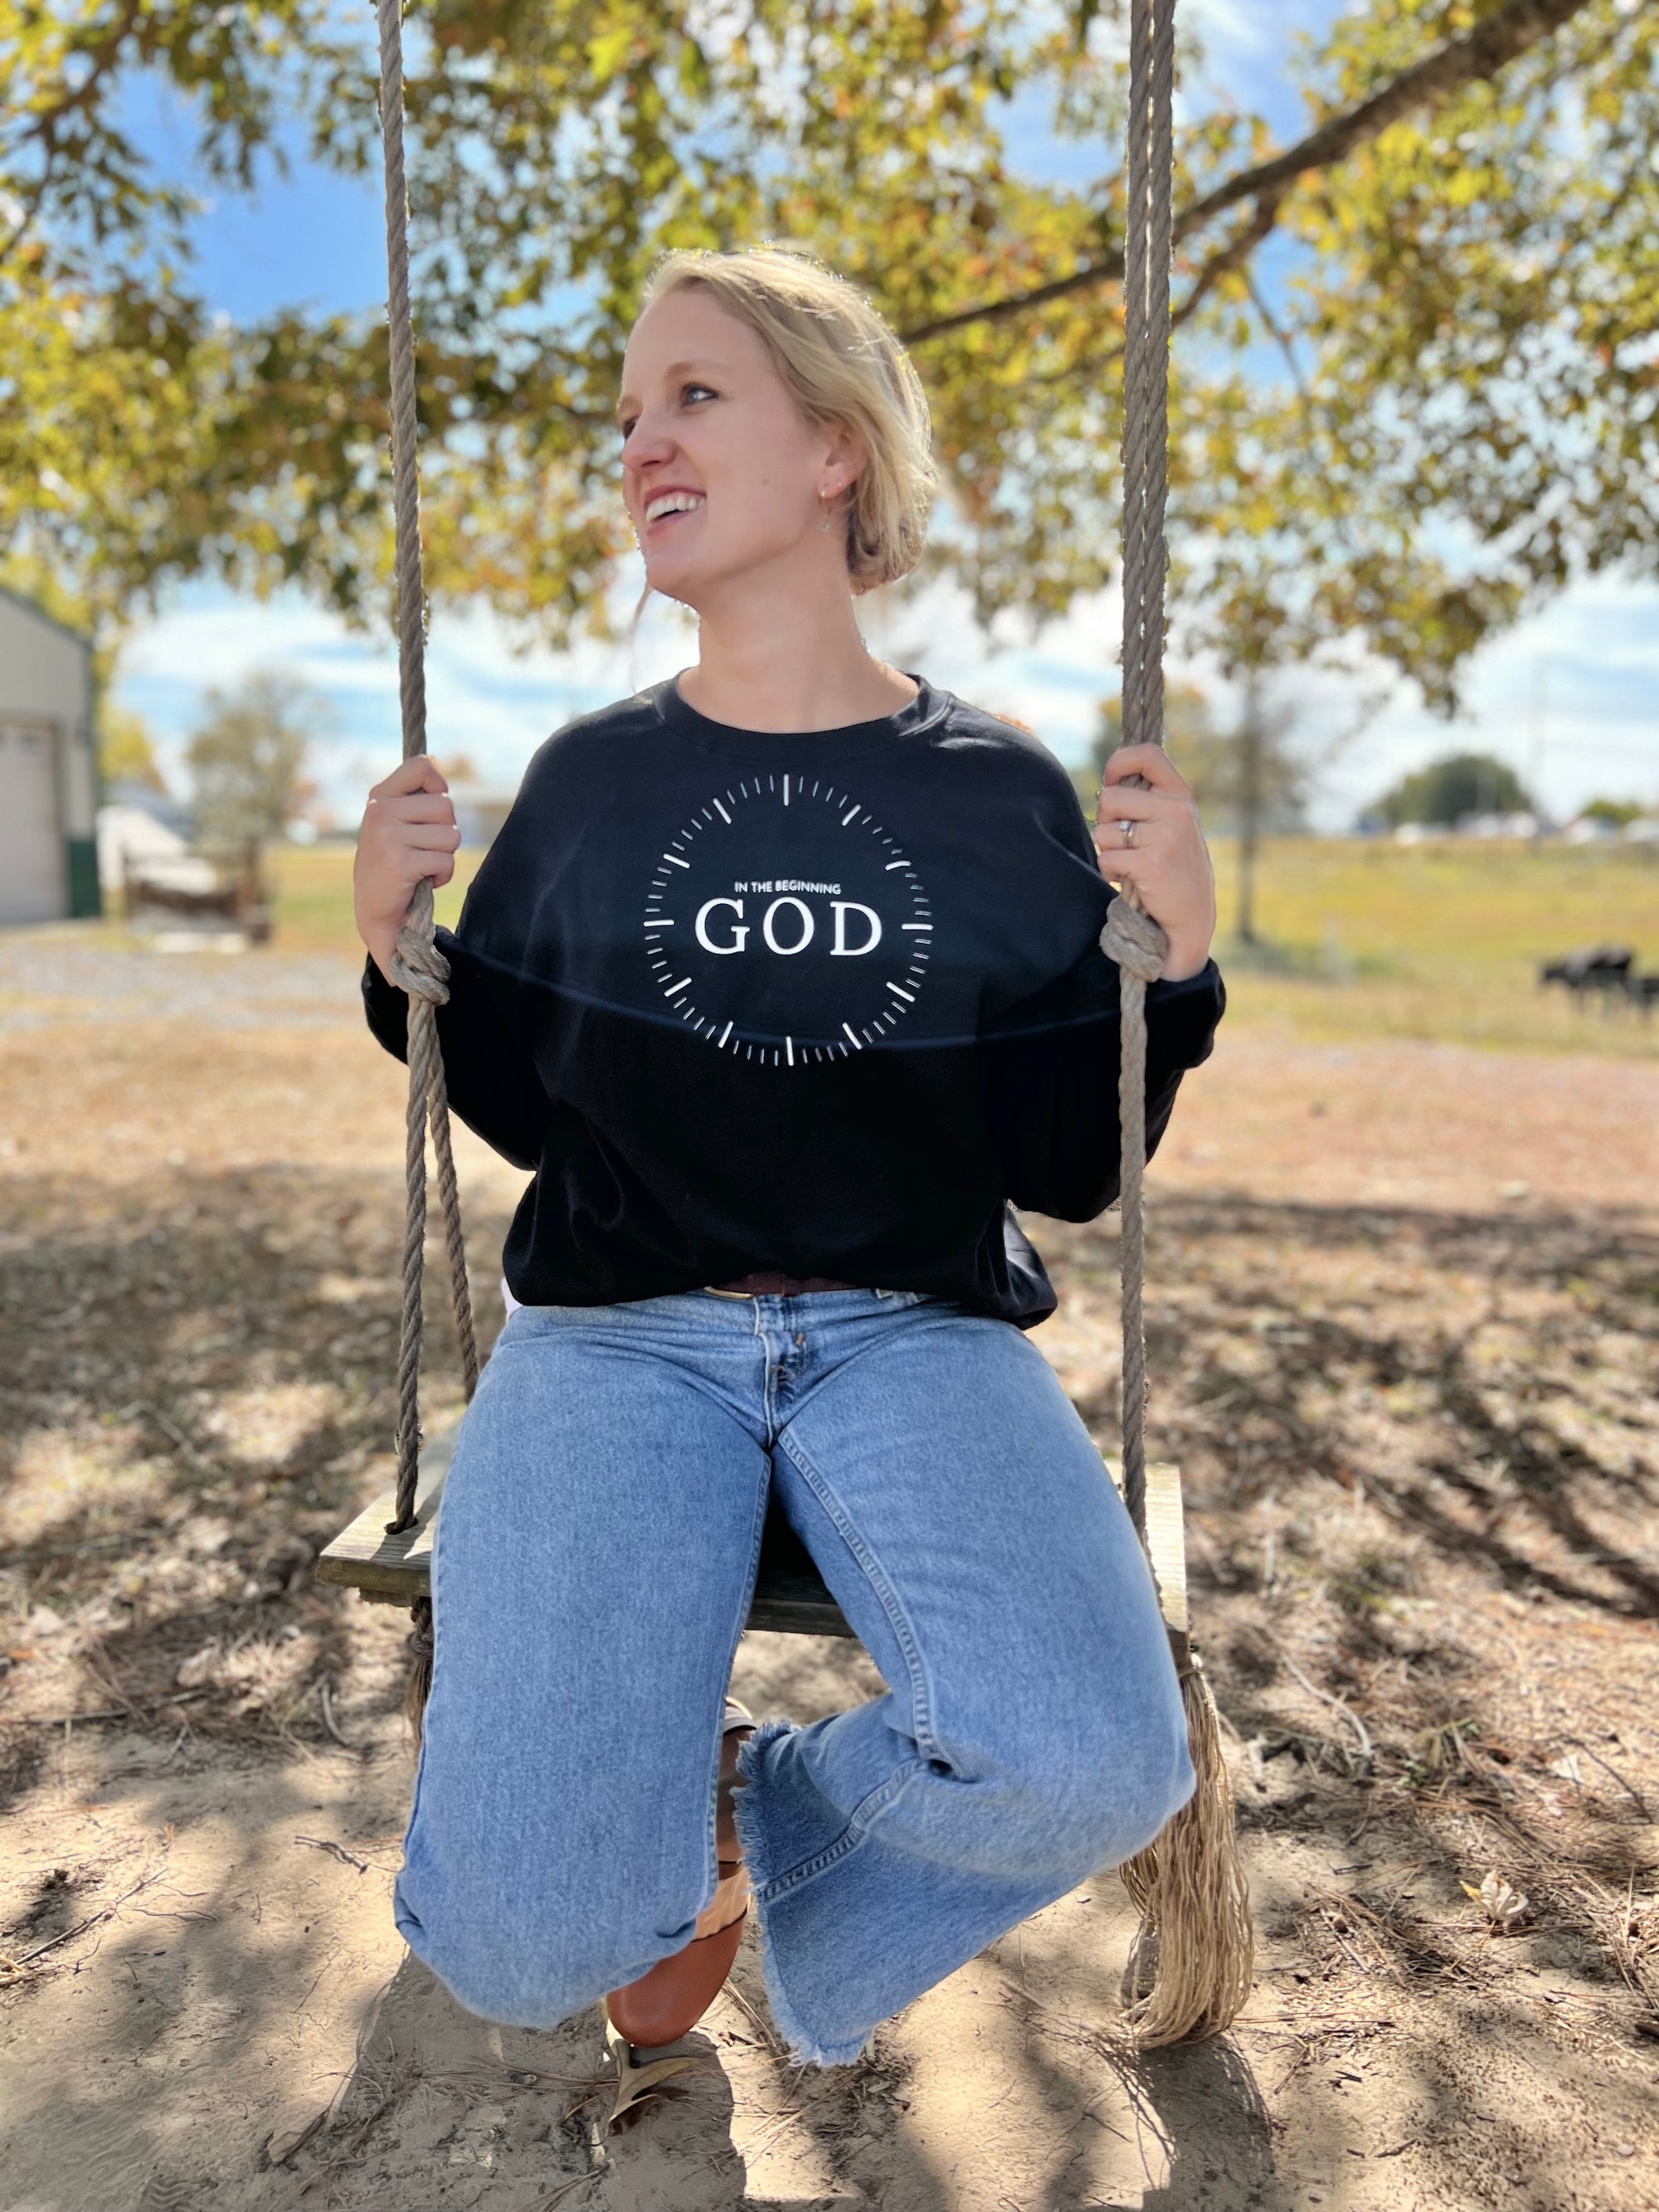 "In the Beginning God" Sweatshirt